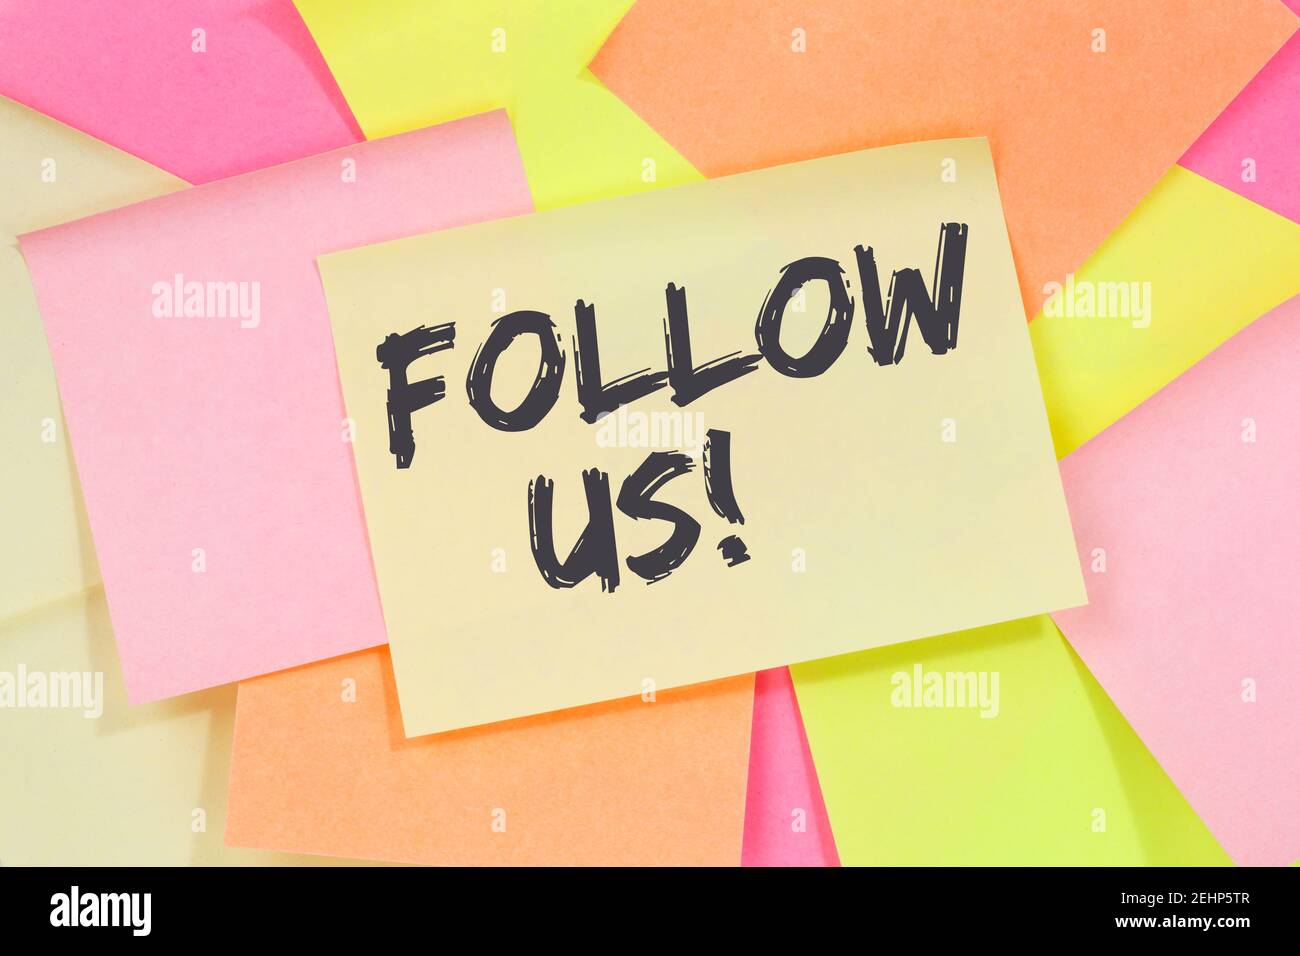 Follow us follower followers fans likes social networking media internet note paper notepaper Stock Photo